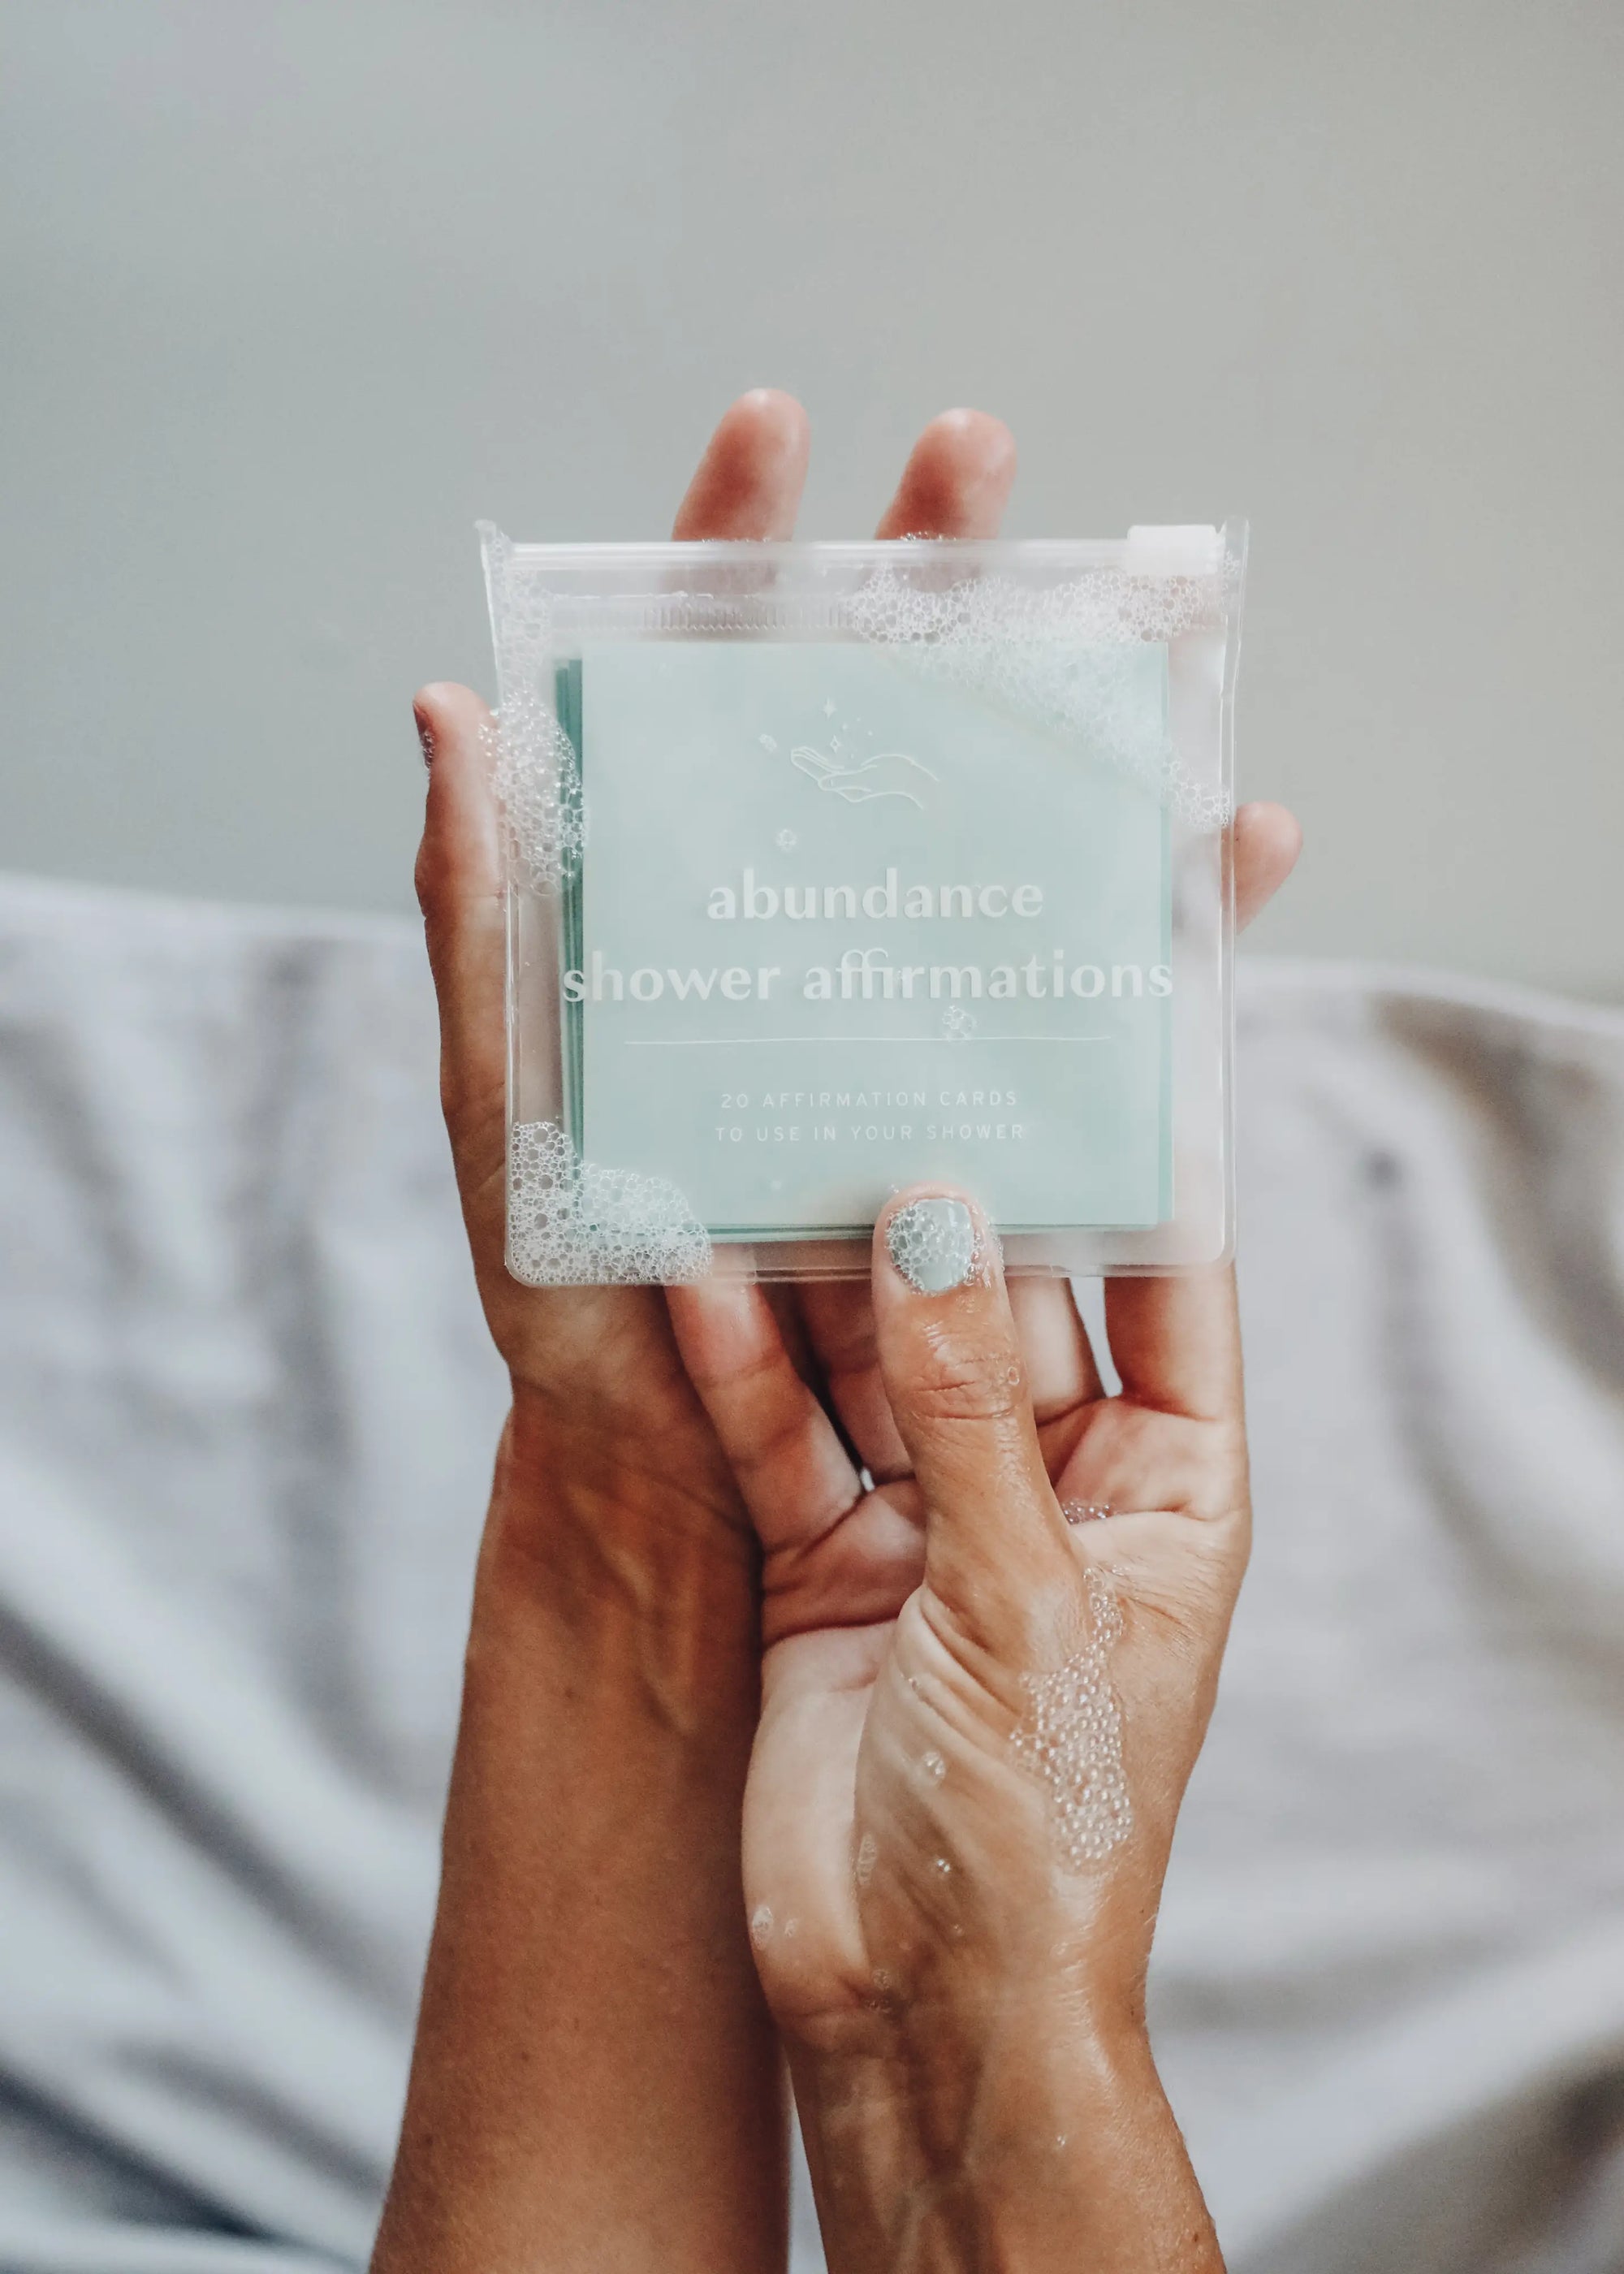 The Shower Affirmation Cards - Abundance by JaxKelly